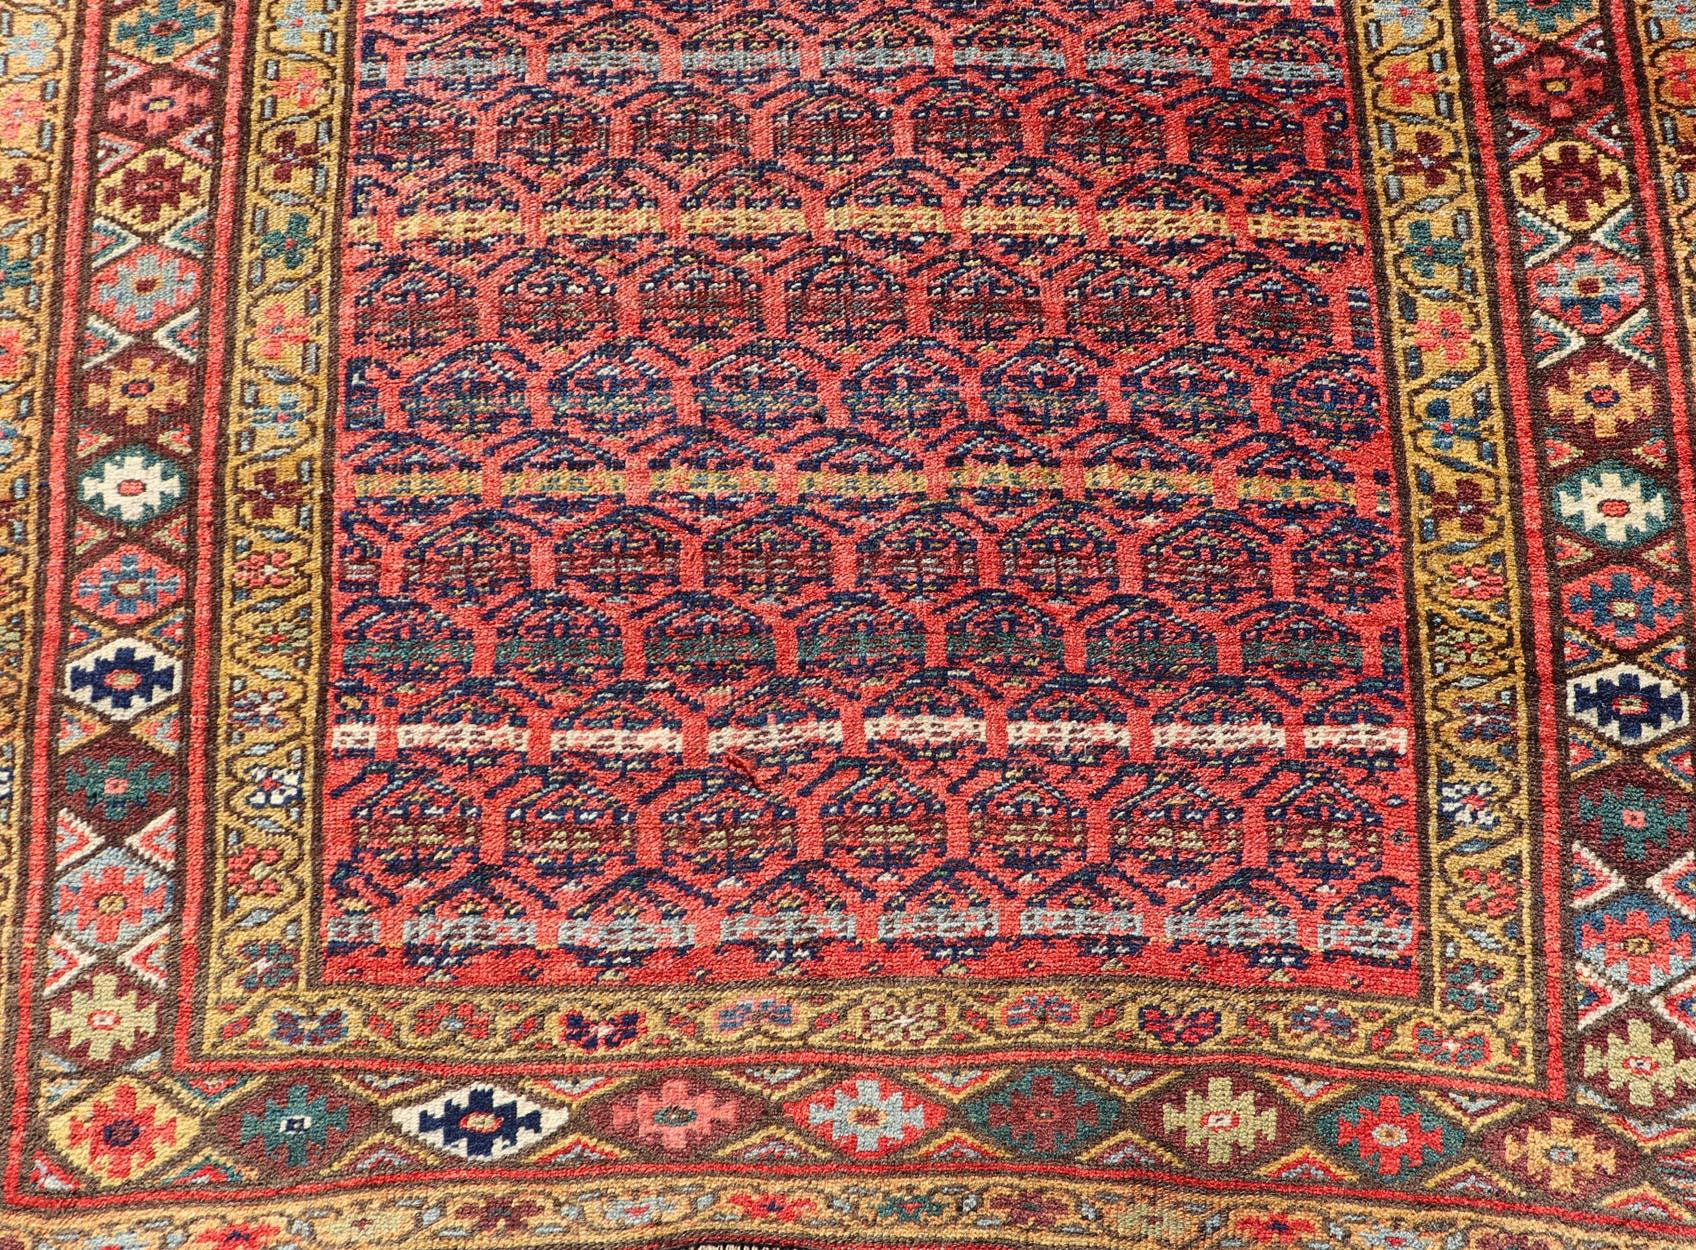 Antique Persian Kurdish Bidjar gallery rug with all-over sub-geometric design. Antique Bidjar wide Runner Keivan Woven Arts; rug W22-1206; country of origin / type: Persian / Bidjar, circa 1900.

Measures: 4'4 x 10'1 

This antique hand-knotted